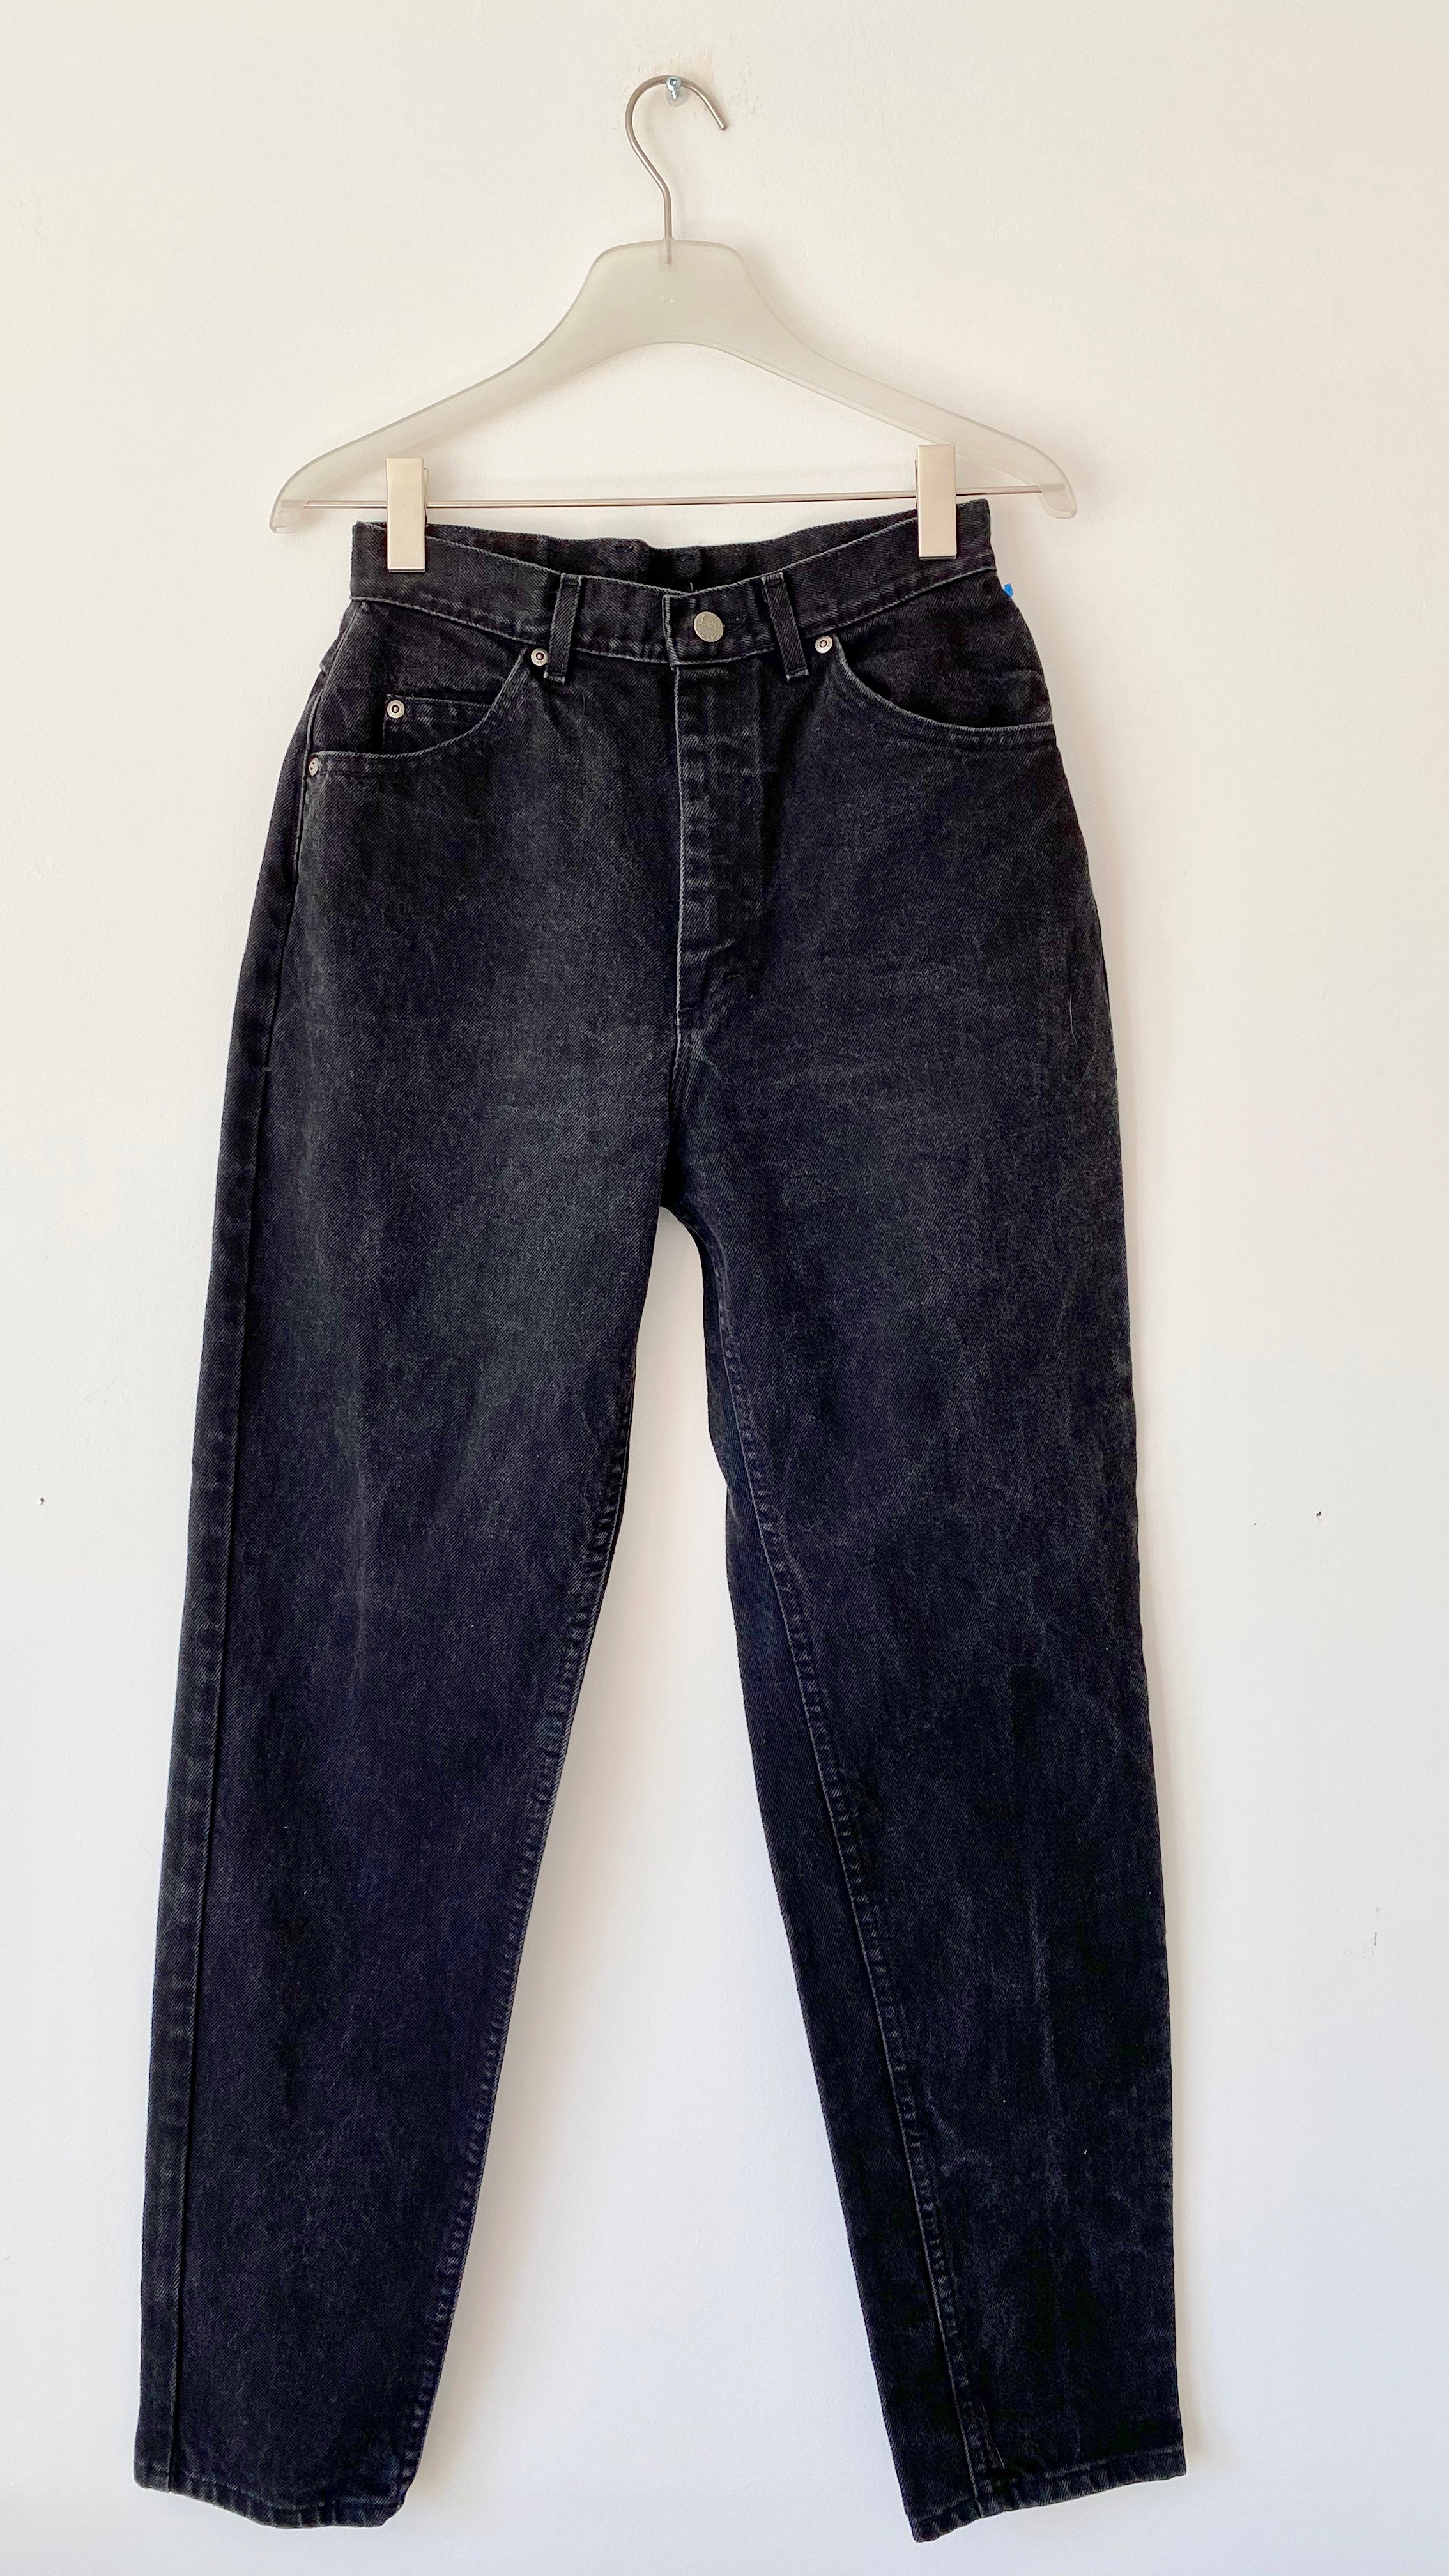 Vintage LEEs Made in USA Black Wash Jeans size 27